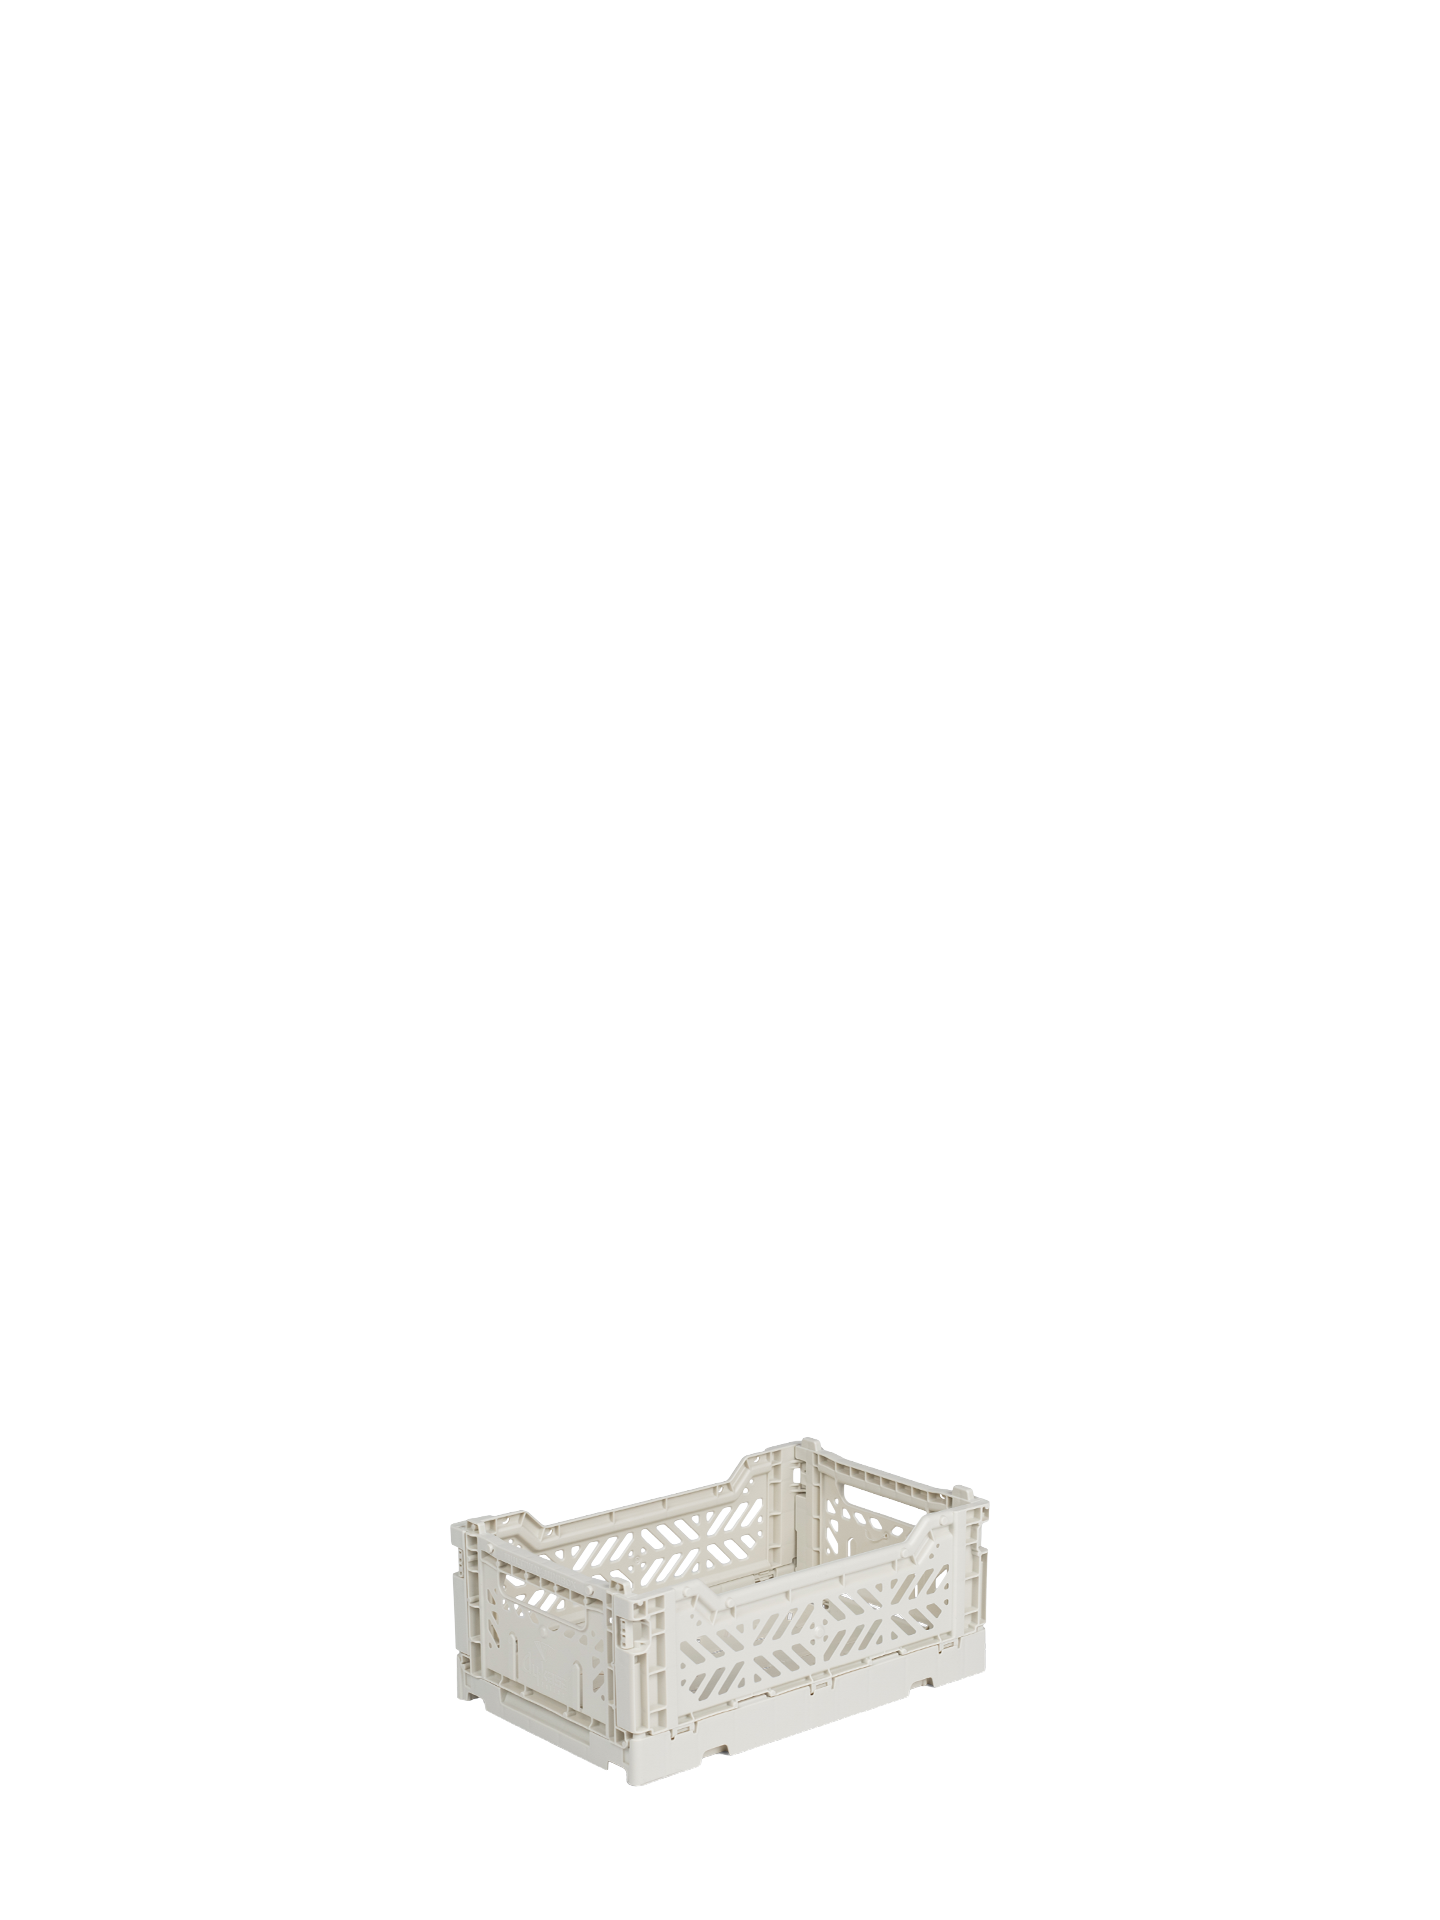 Mini Aykasa crate in light grey stacks and folds